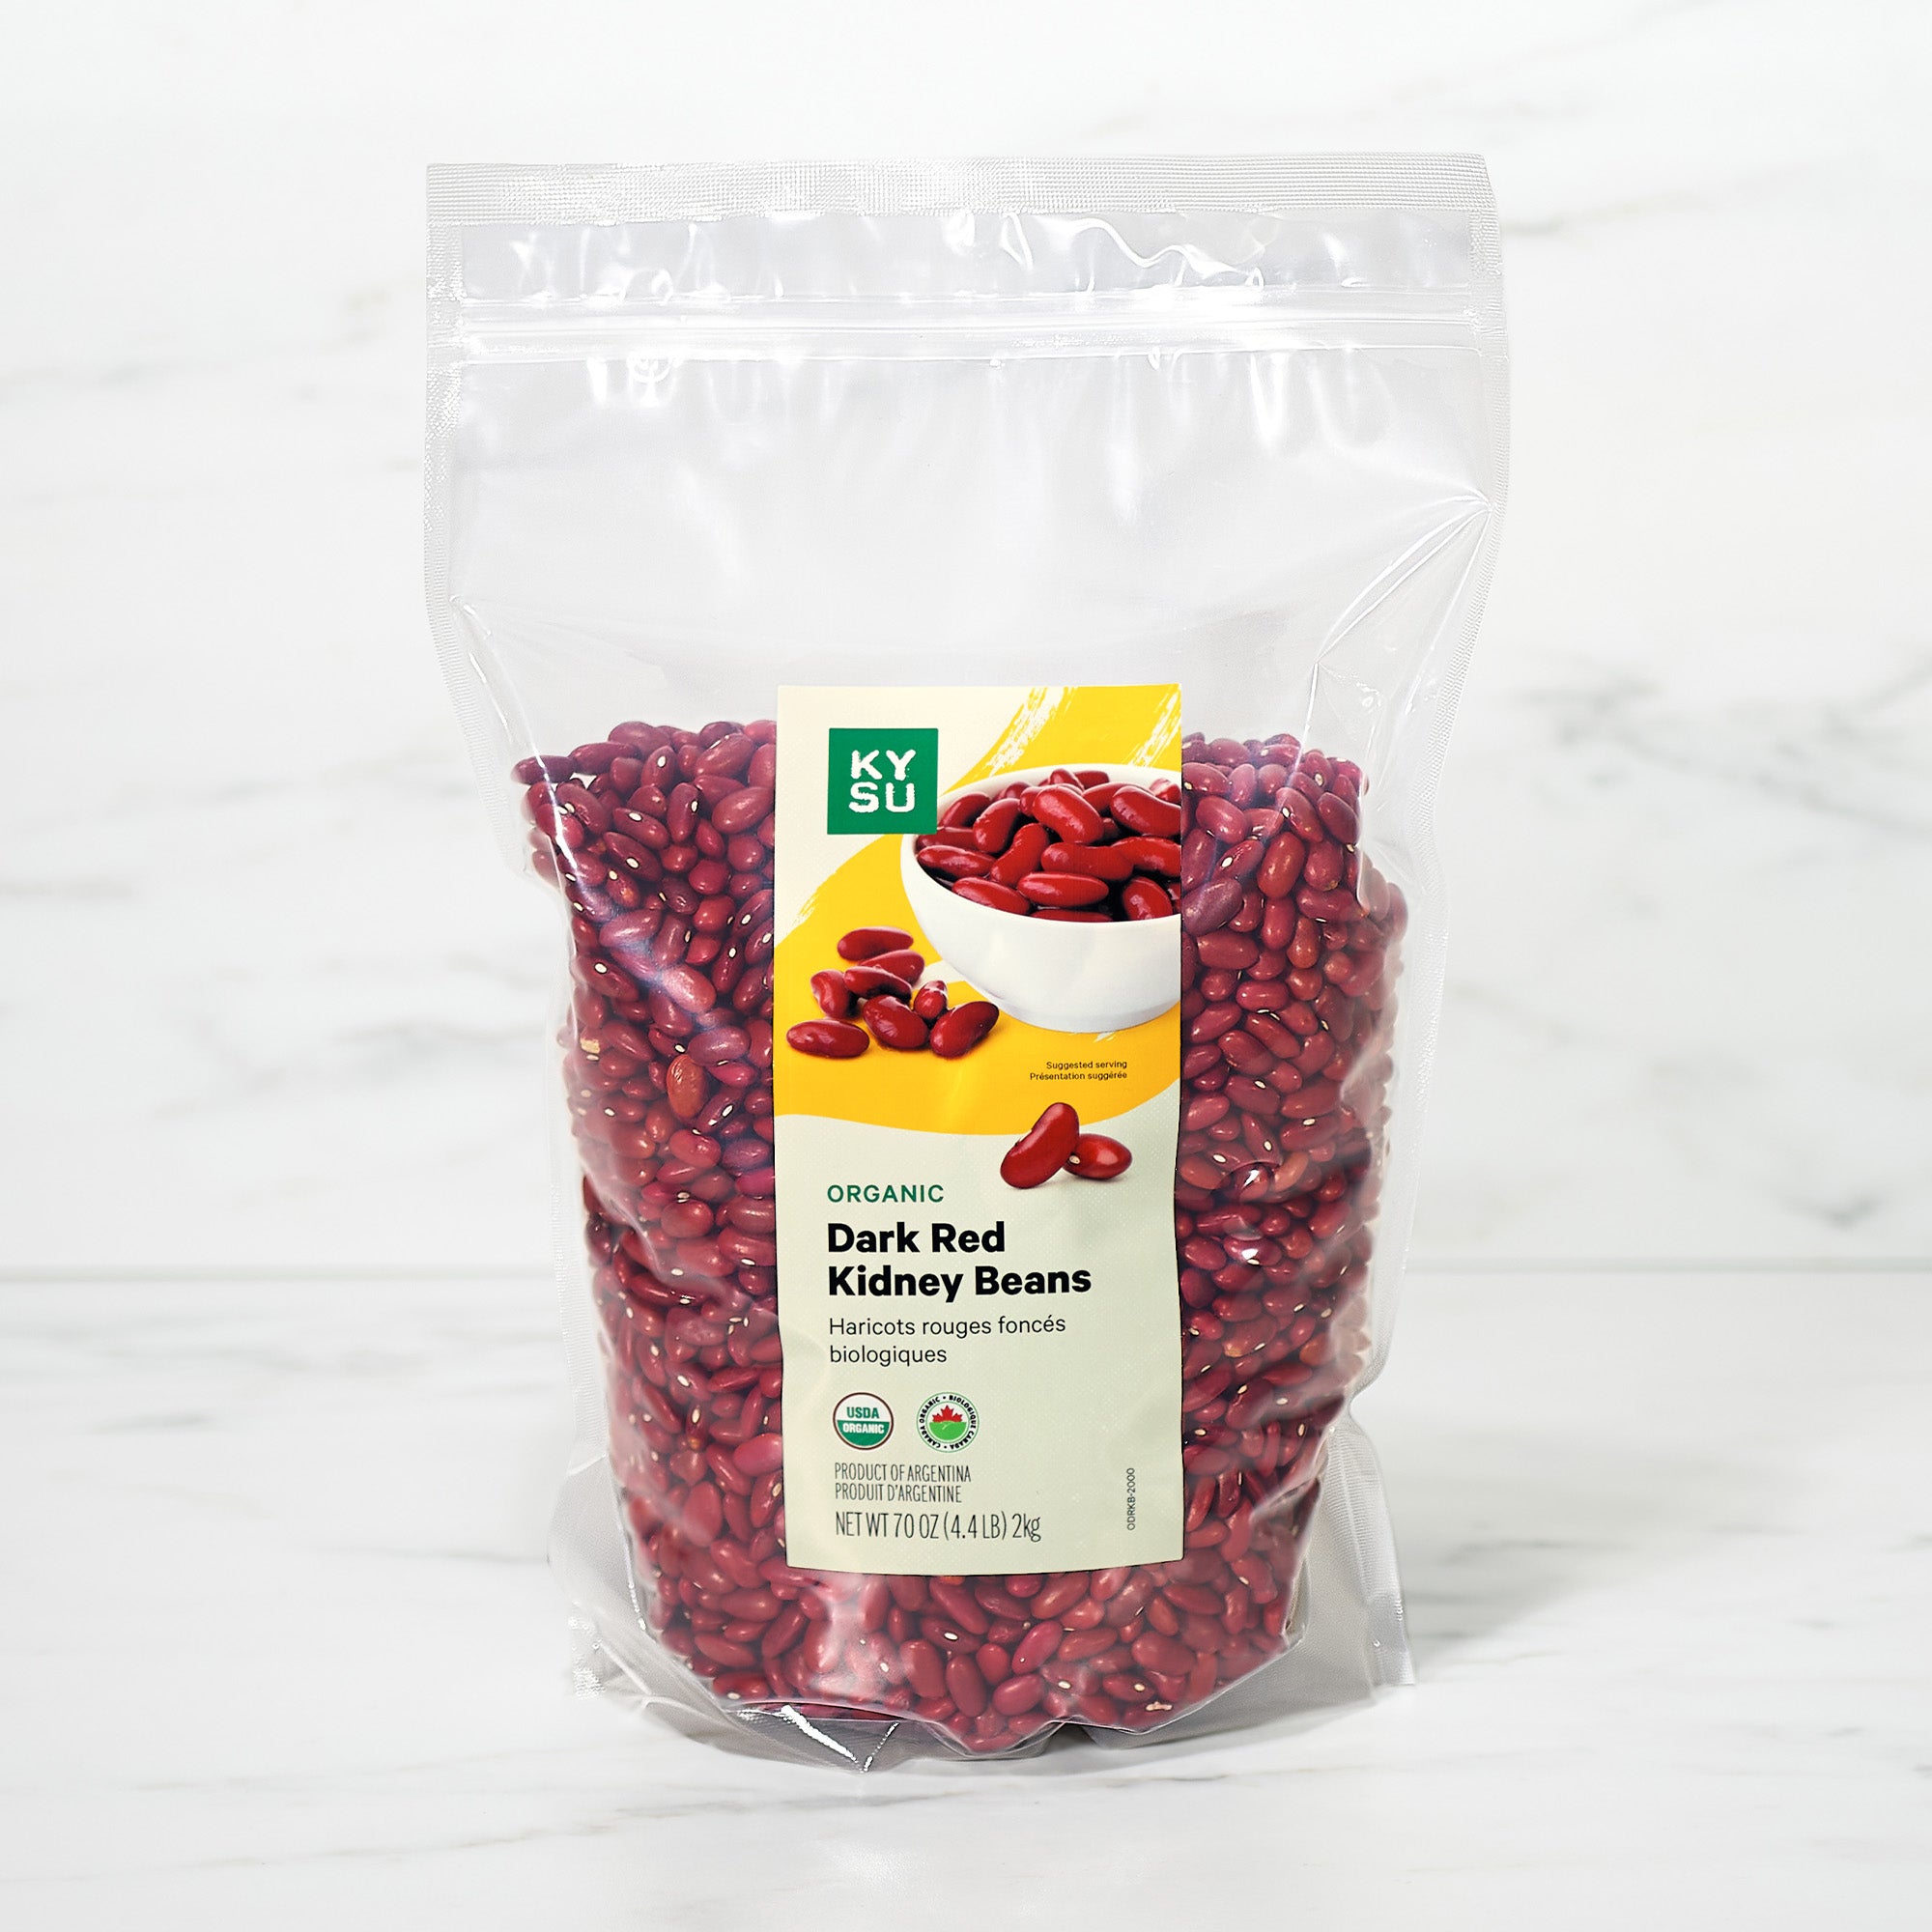 Organic dark red kidney beans, 4.4 lb